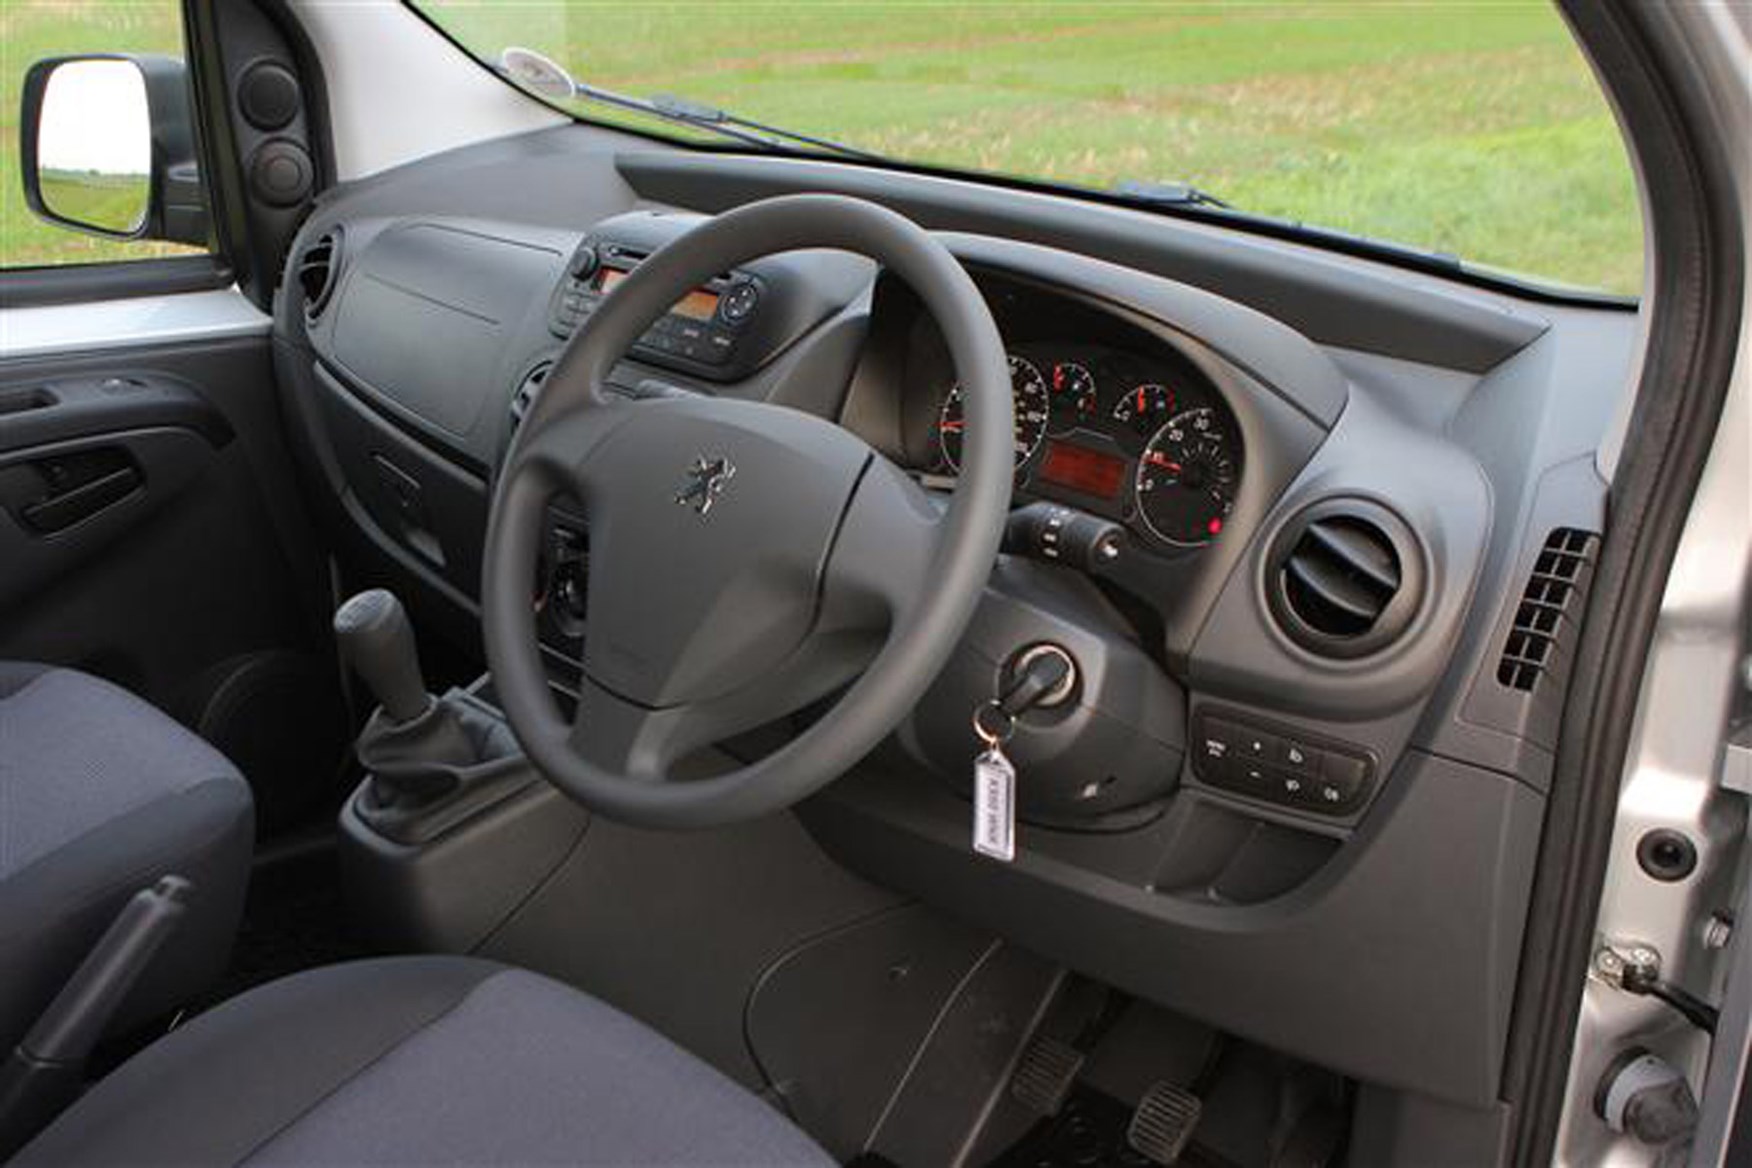 Peugeot Bipper review on Parkers Vans - interior